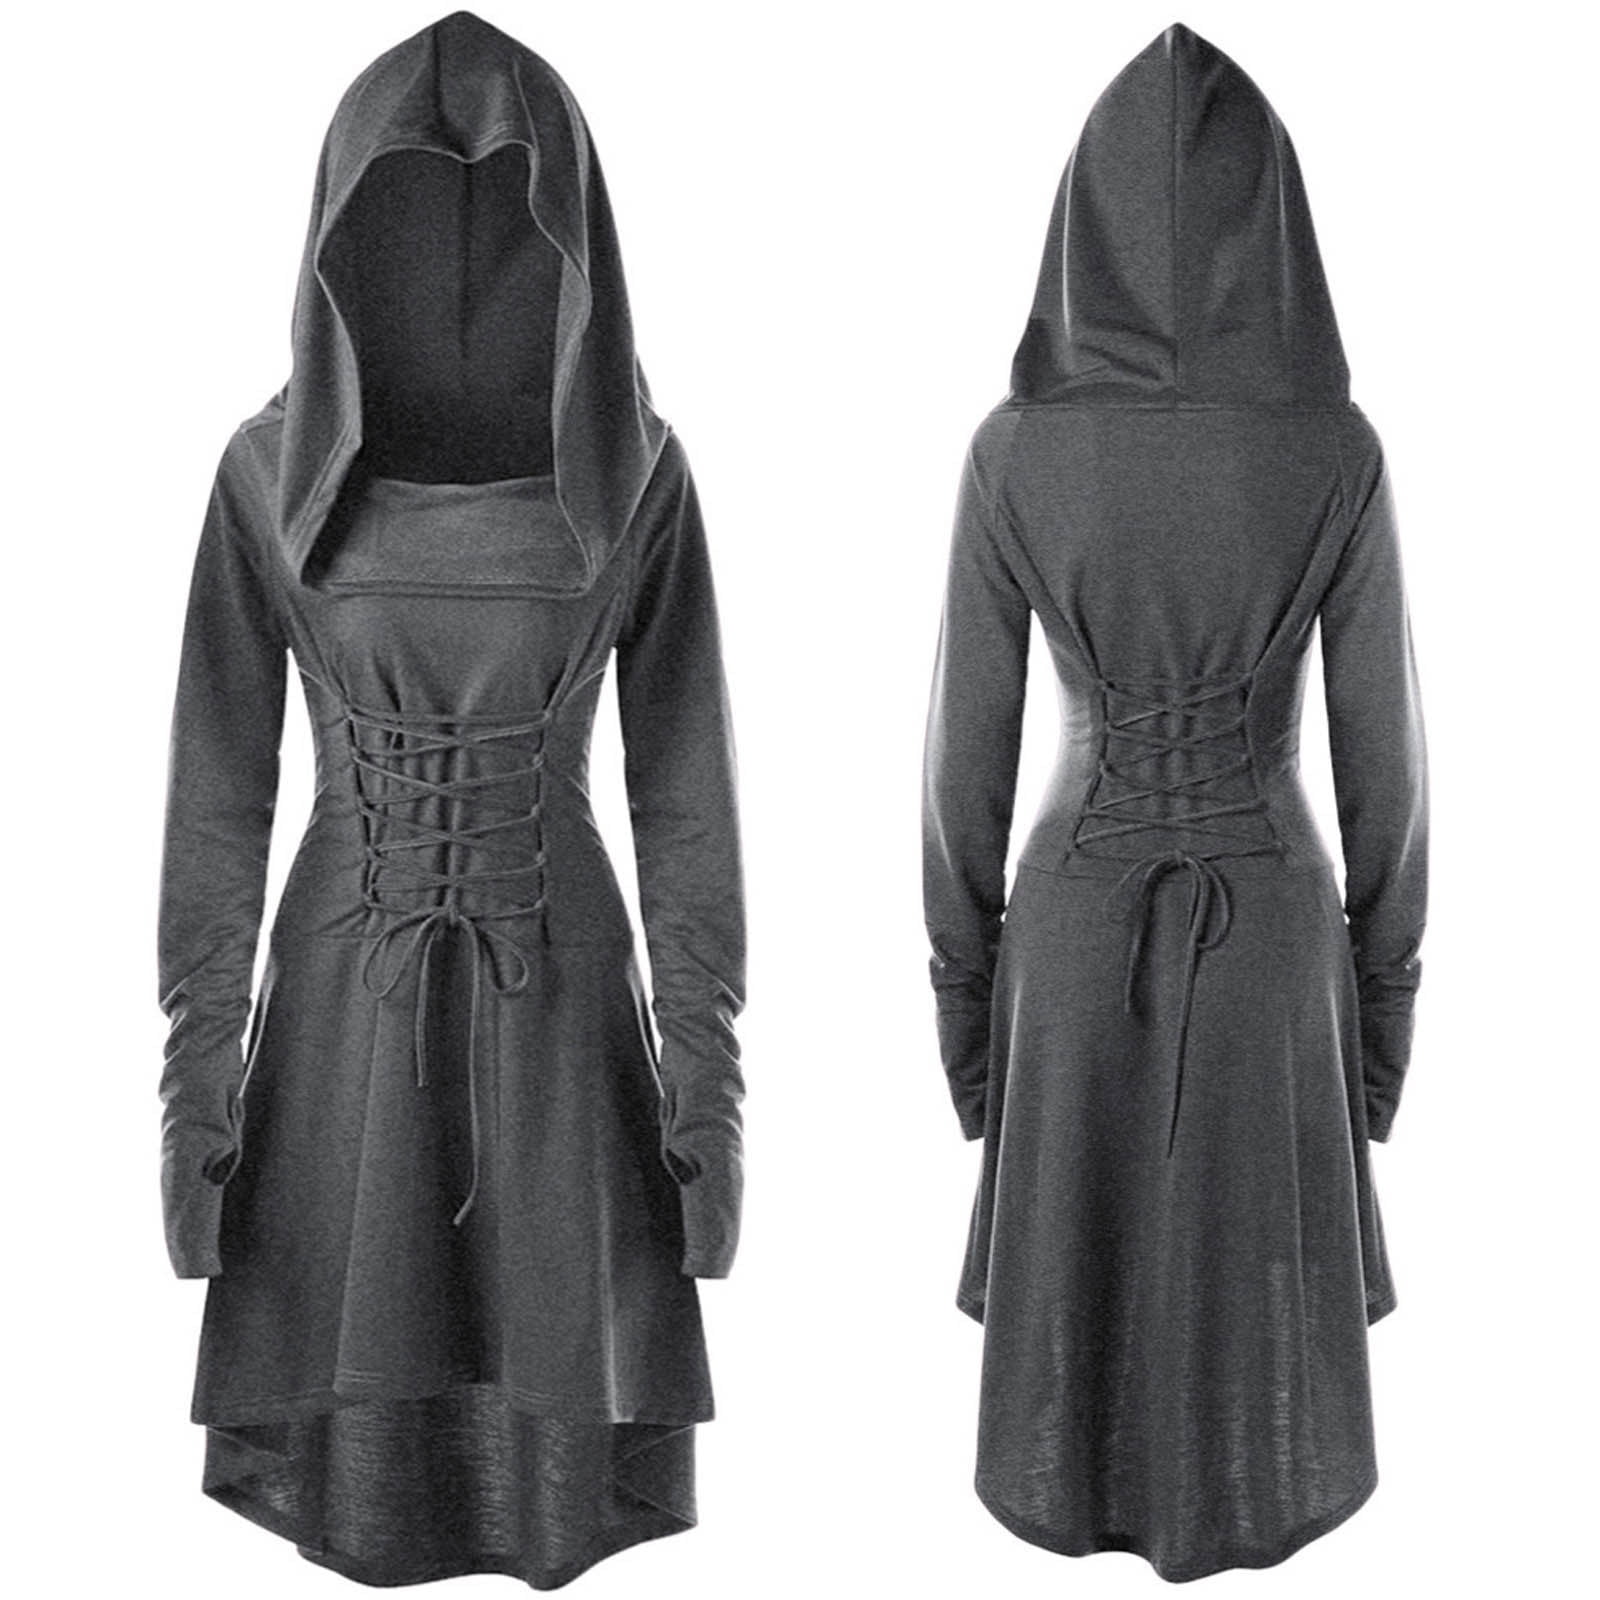 Women Hooded Sweatshirt Dress Long Sleeve Medieval Vintage Lace Up High Low Cloak Robe 